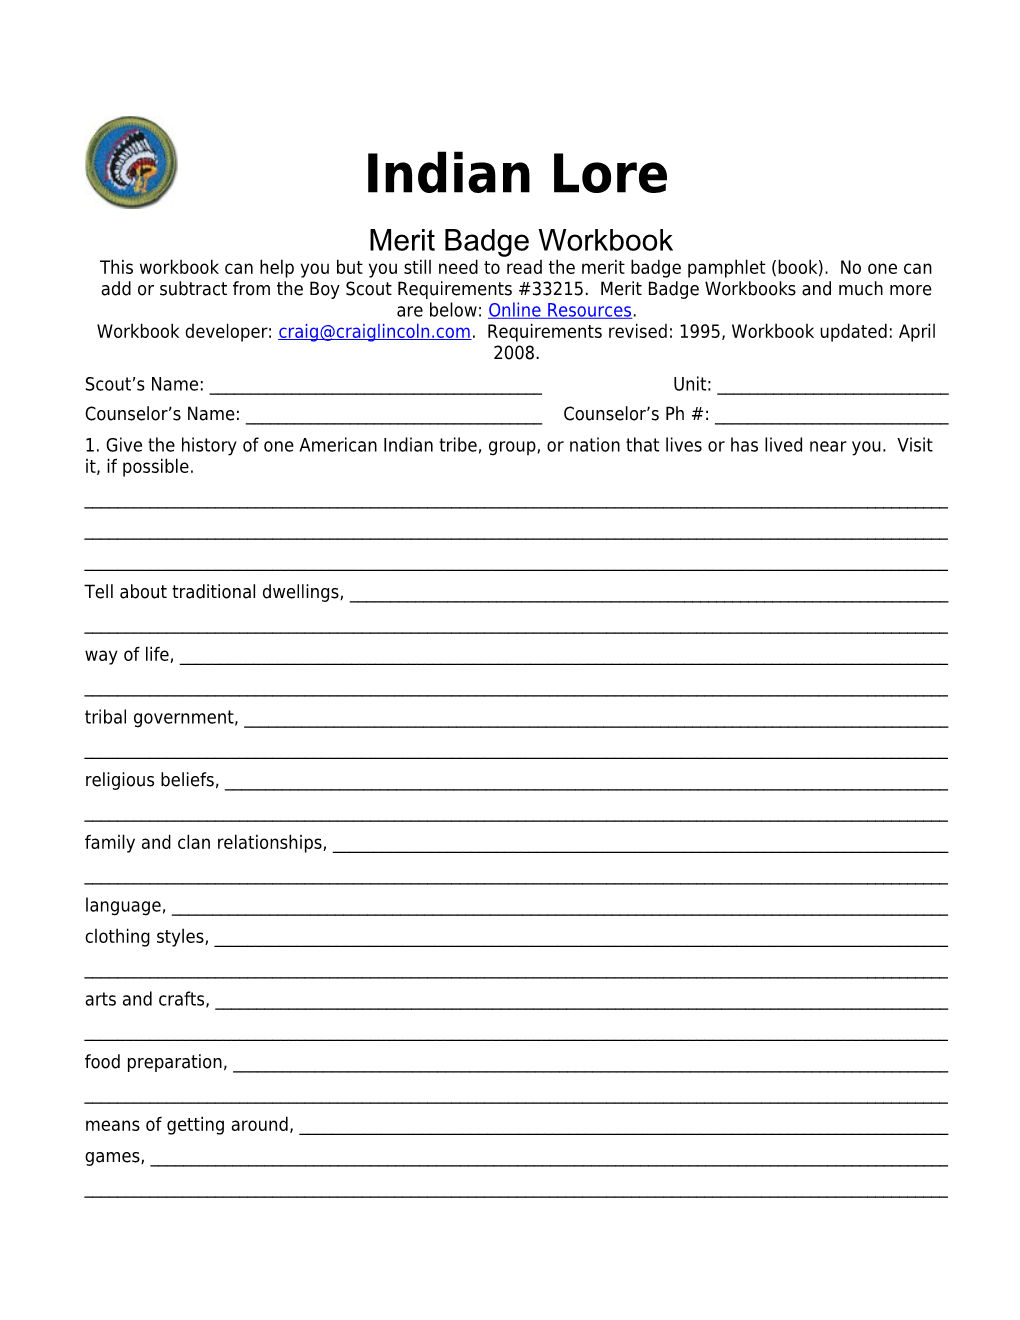 Indian Lore P. 1 Merit Badge Workbookscout's Name: ______